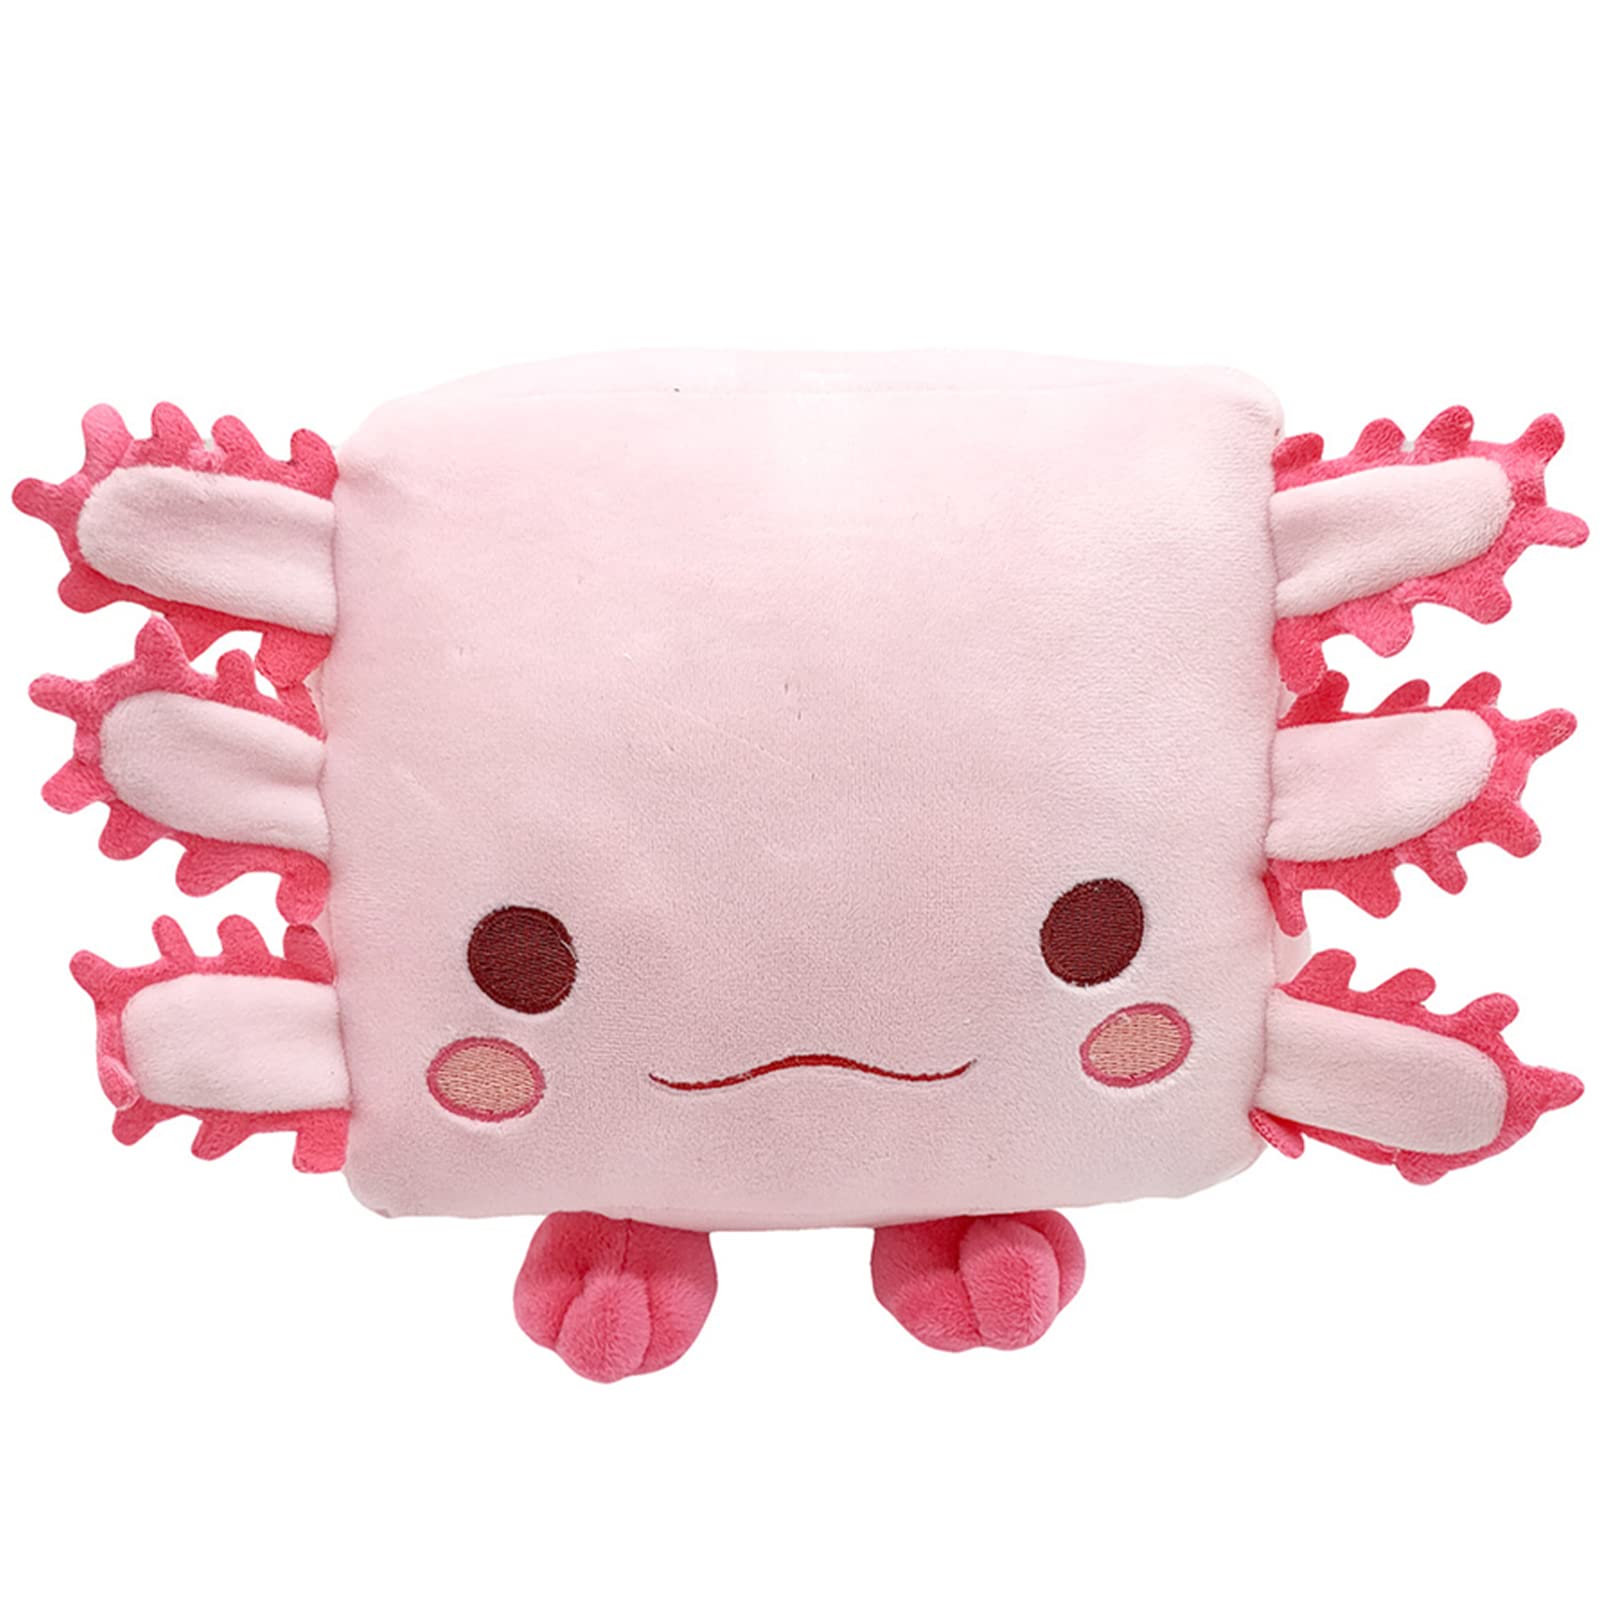 Salamander Stuffed Animal Cute Kawaii Soft Toy for Kids and Fans